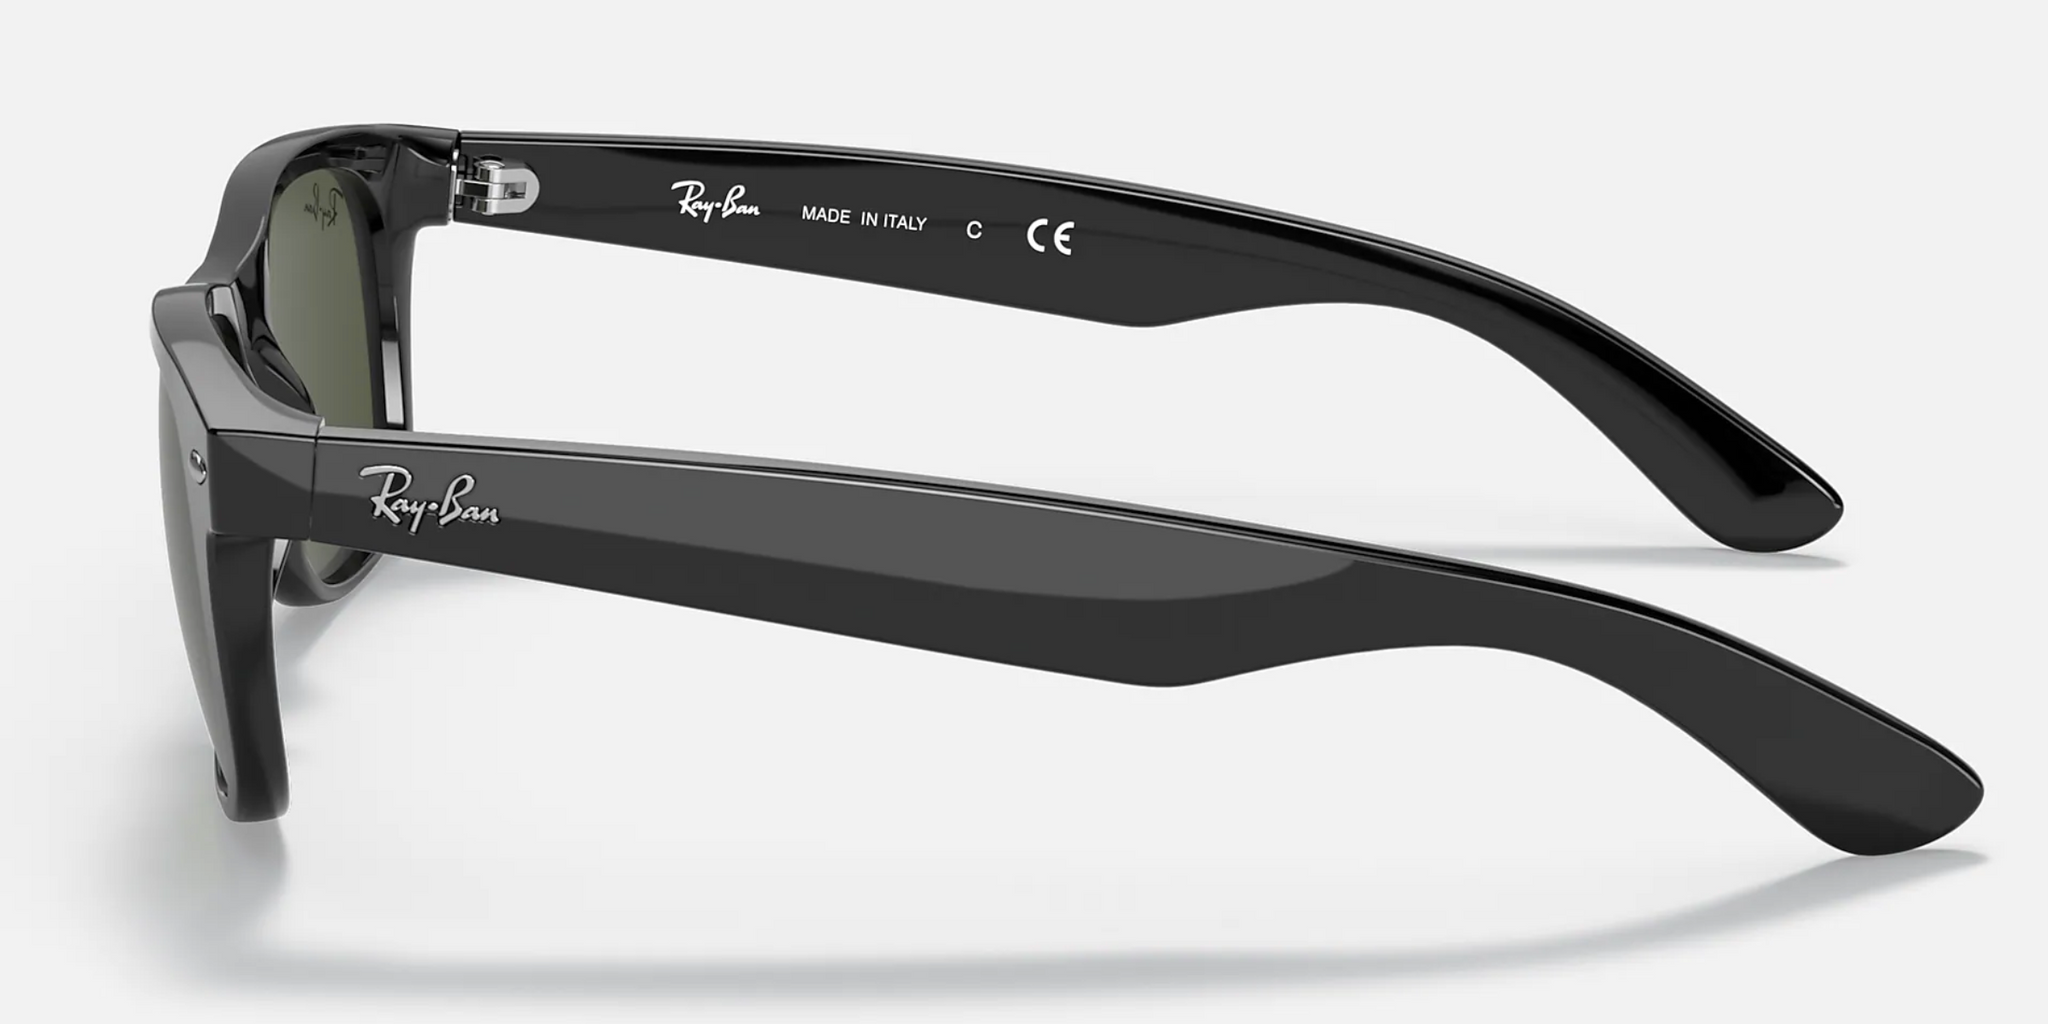 plukke forsvar Trickle Ray-Ban New Wayfarer Black Classic Sunglasses RB2132 - Flight Sunglasses